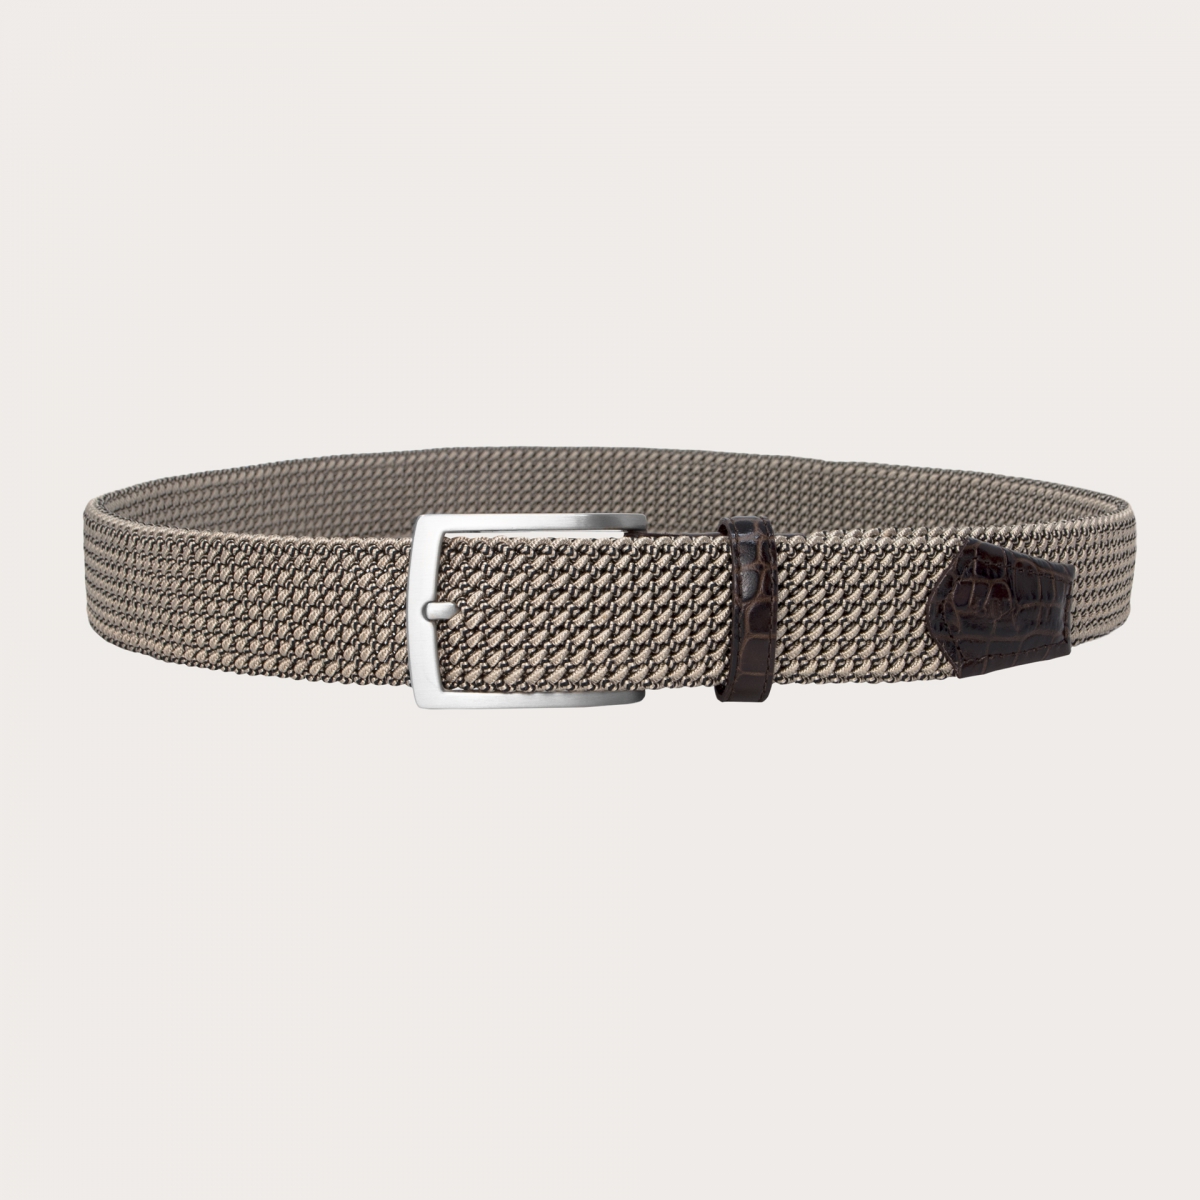 BRUCLE Braided elastic stretch tubular belt, tan and brown, nickel free